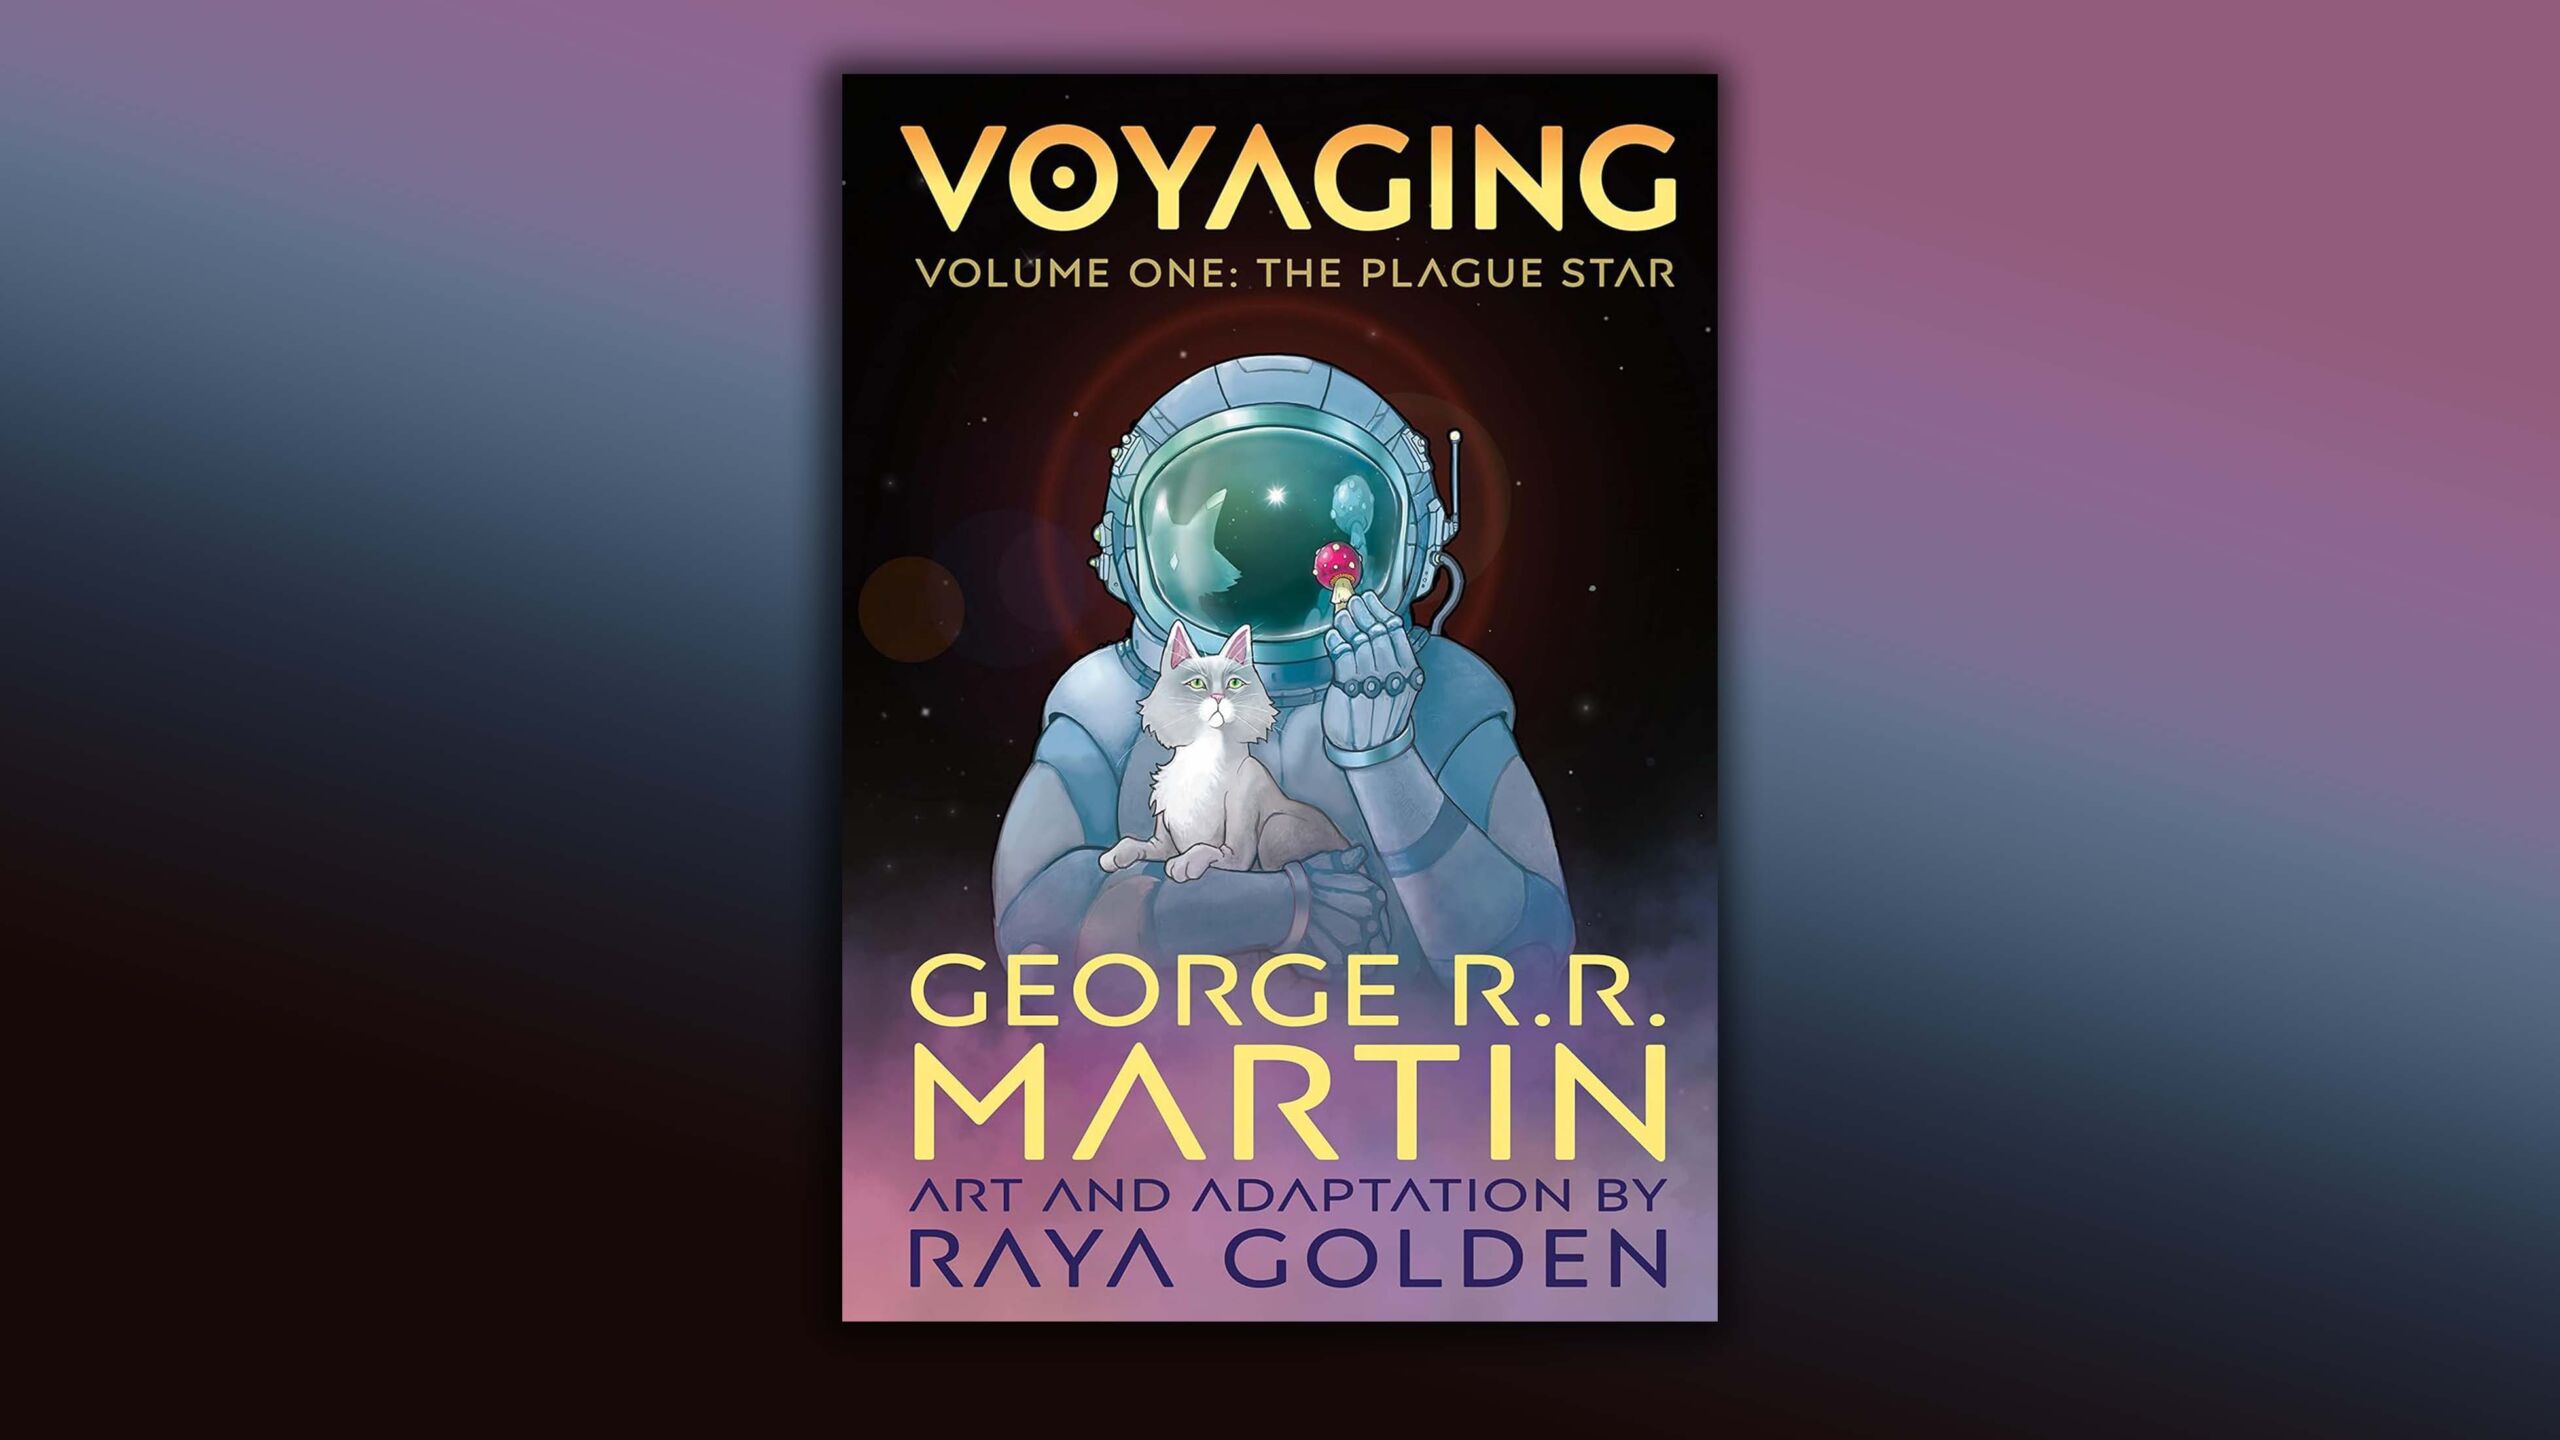 Tuf Voyaging by George R. R. Martin: 9780345537997